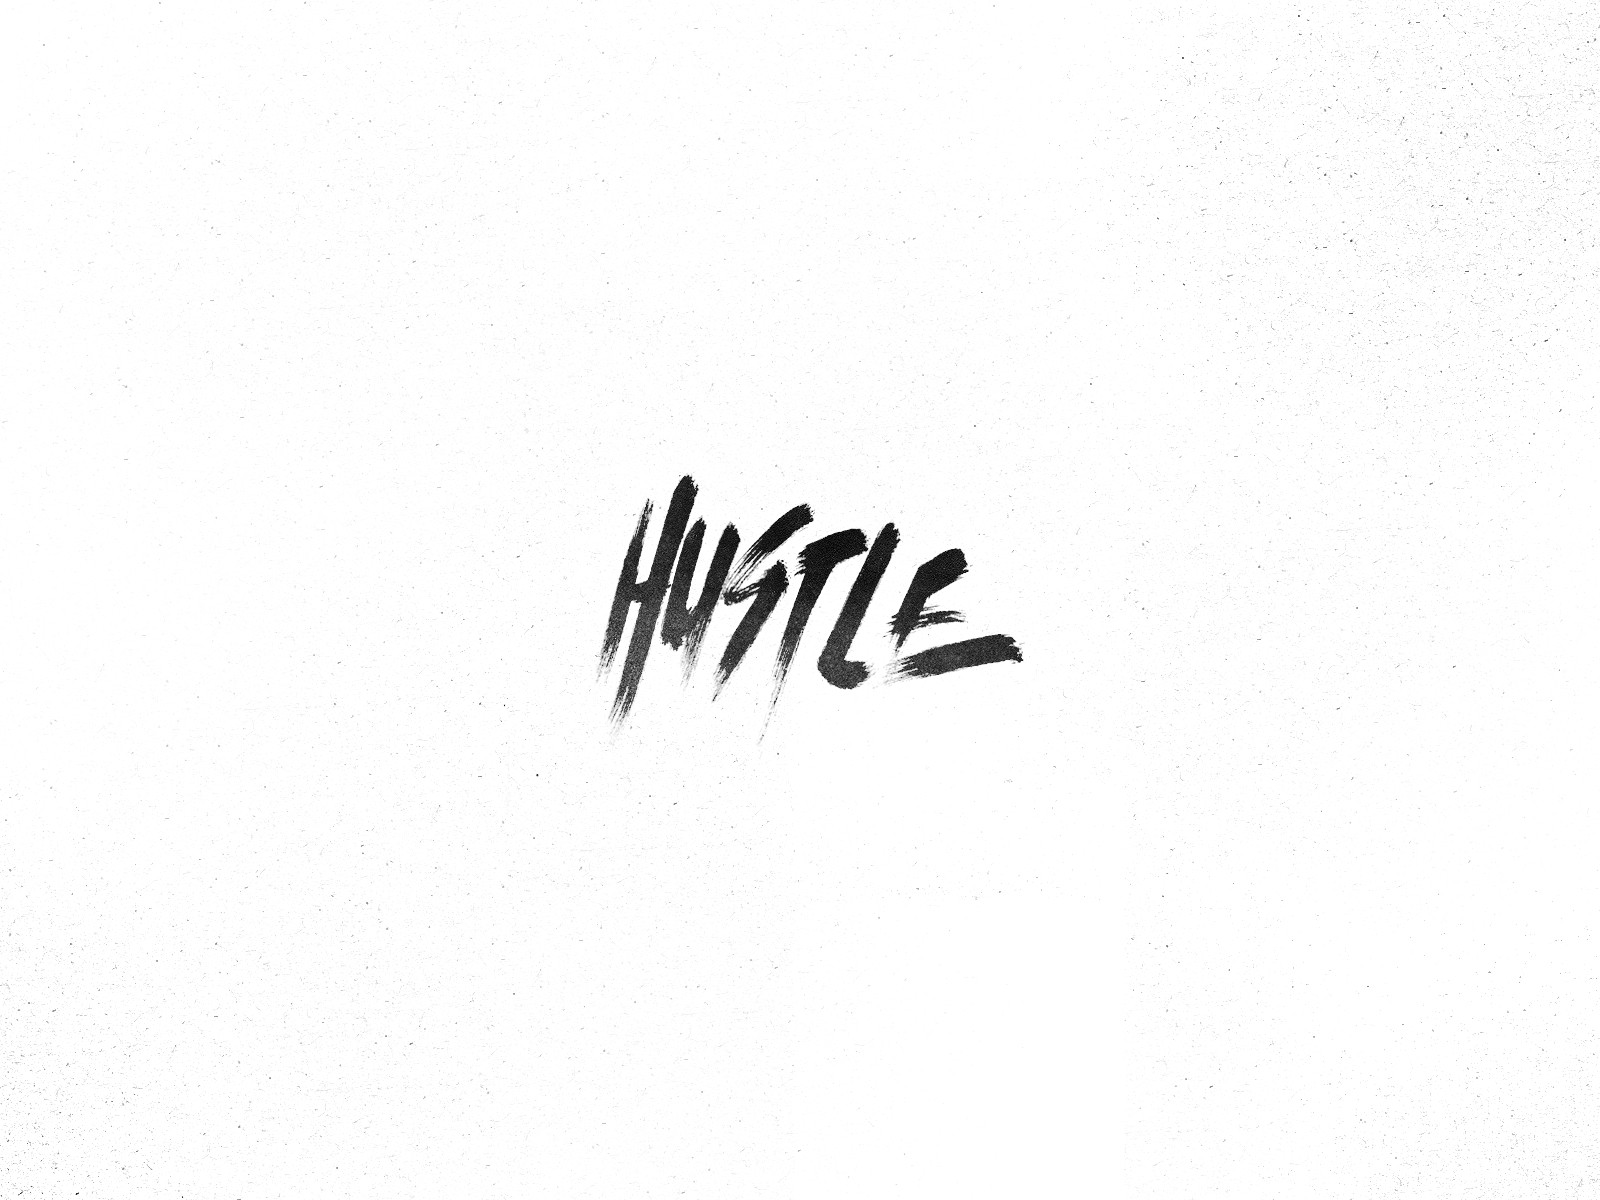 General 1600x1200 minimalism typography hustle simple background white background